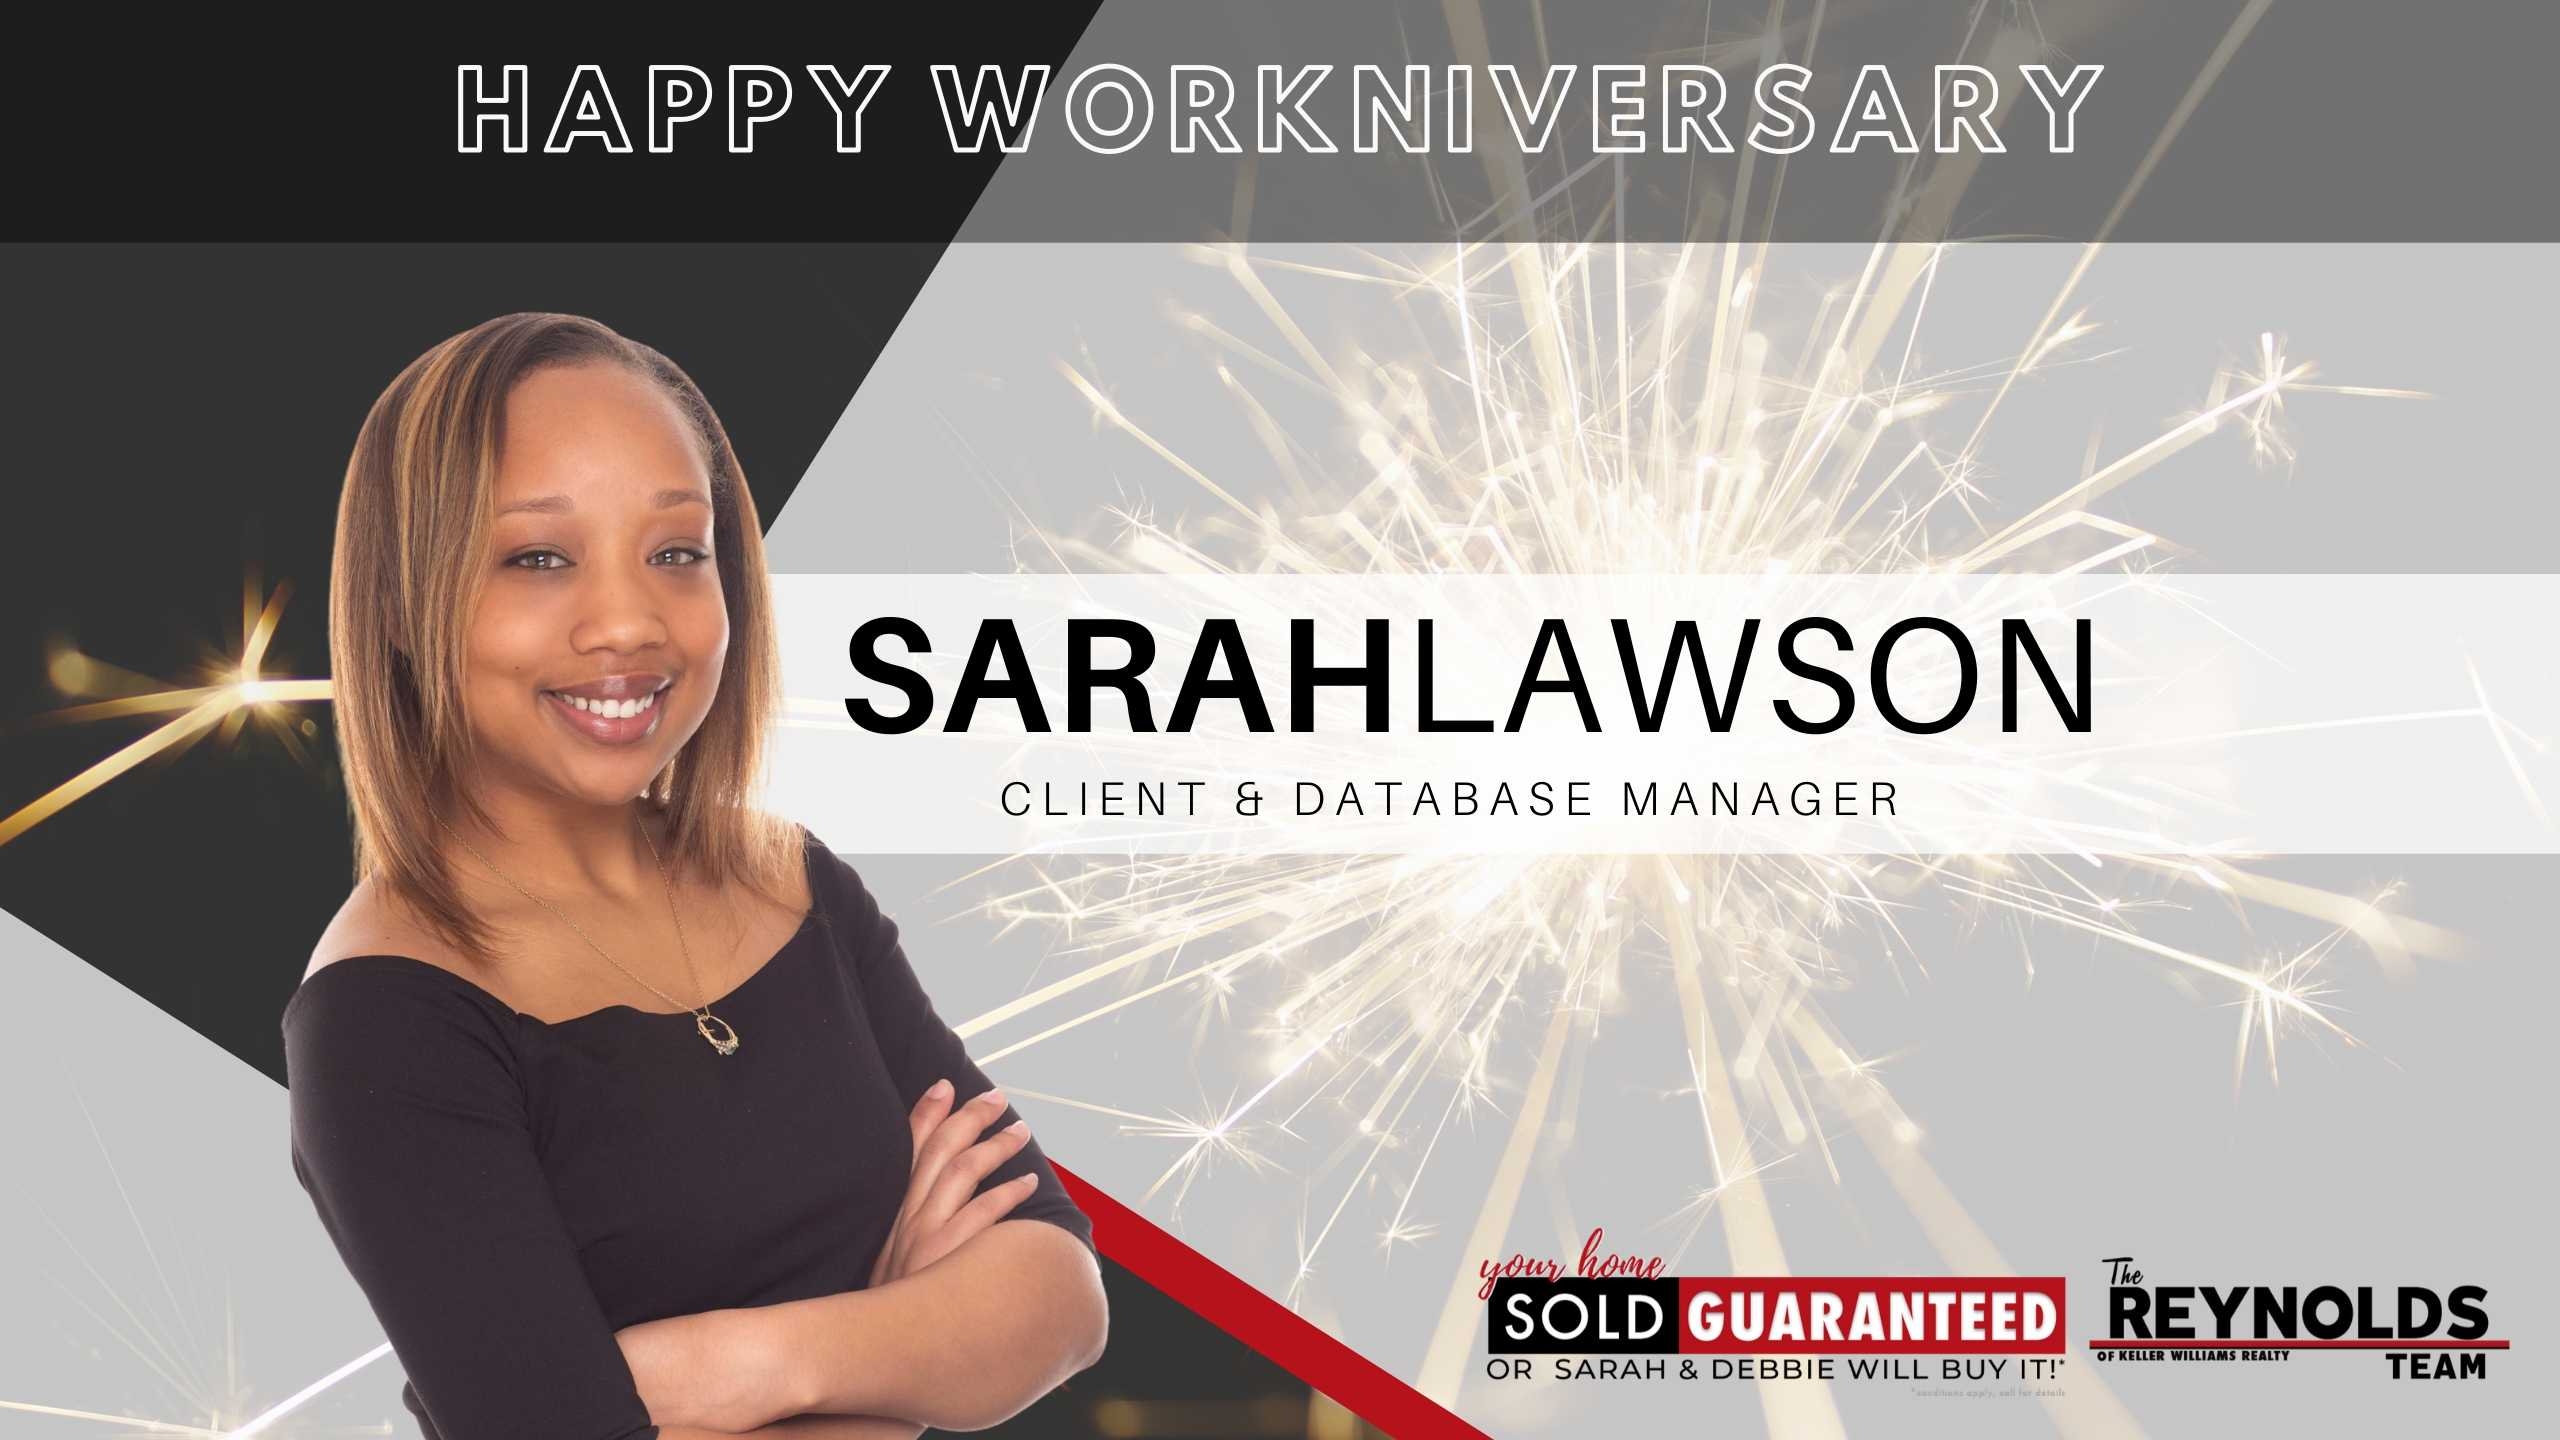 Happy Workniversary, Sarah Lawson!